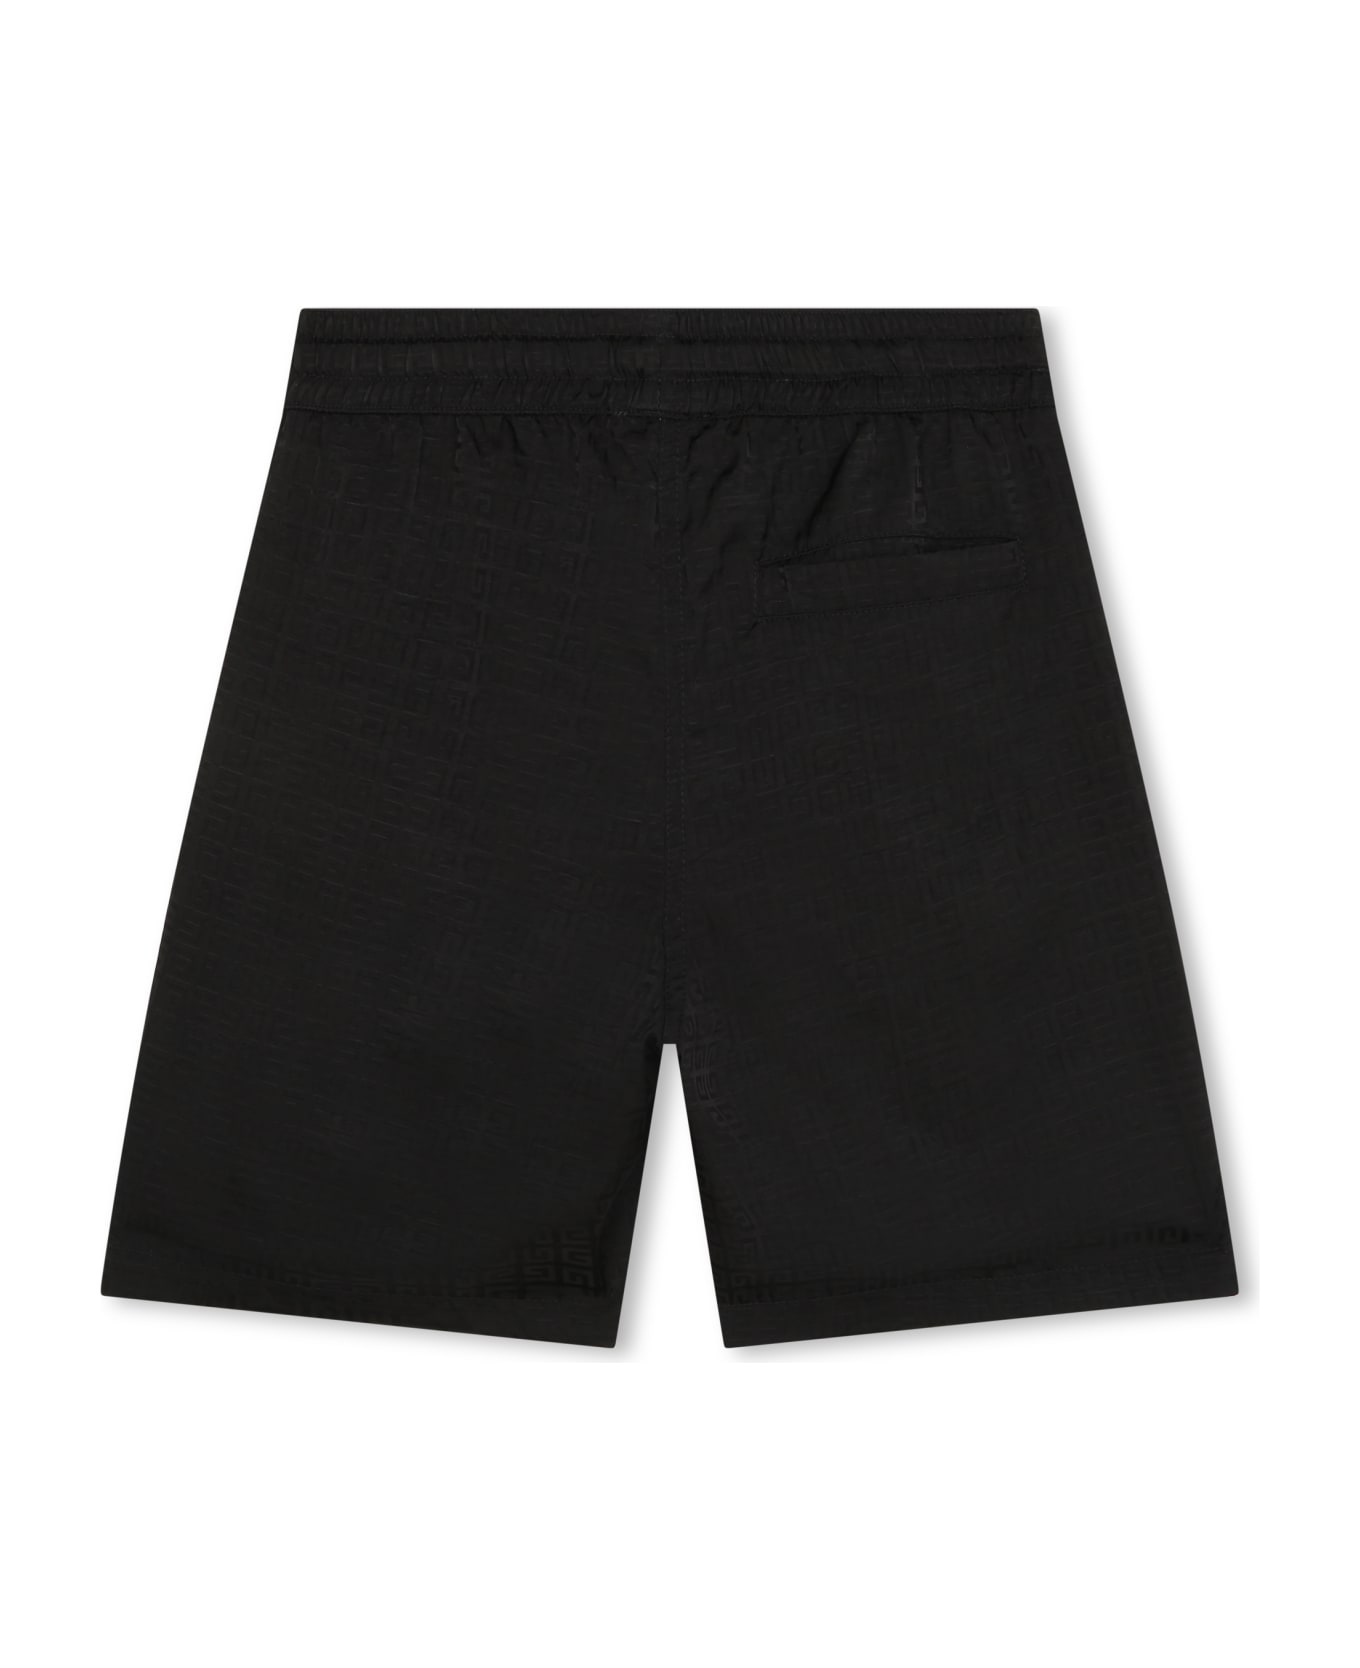 Givenchy Sports Shorts With Monogram - B Nero